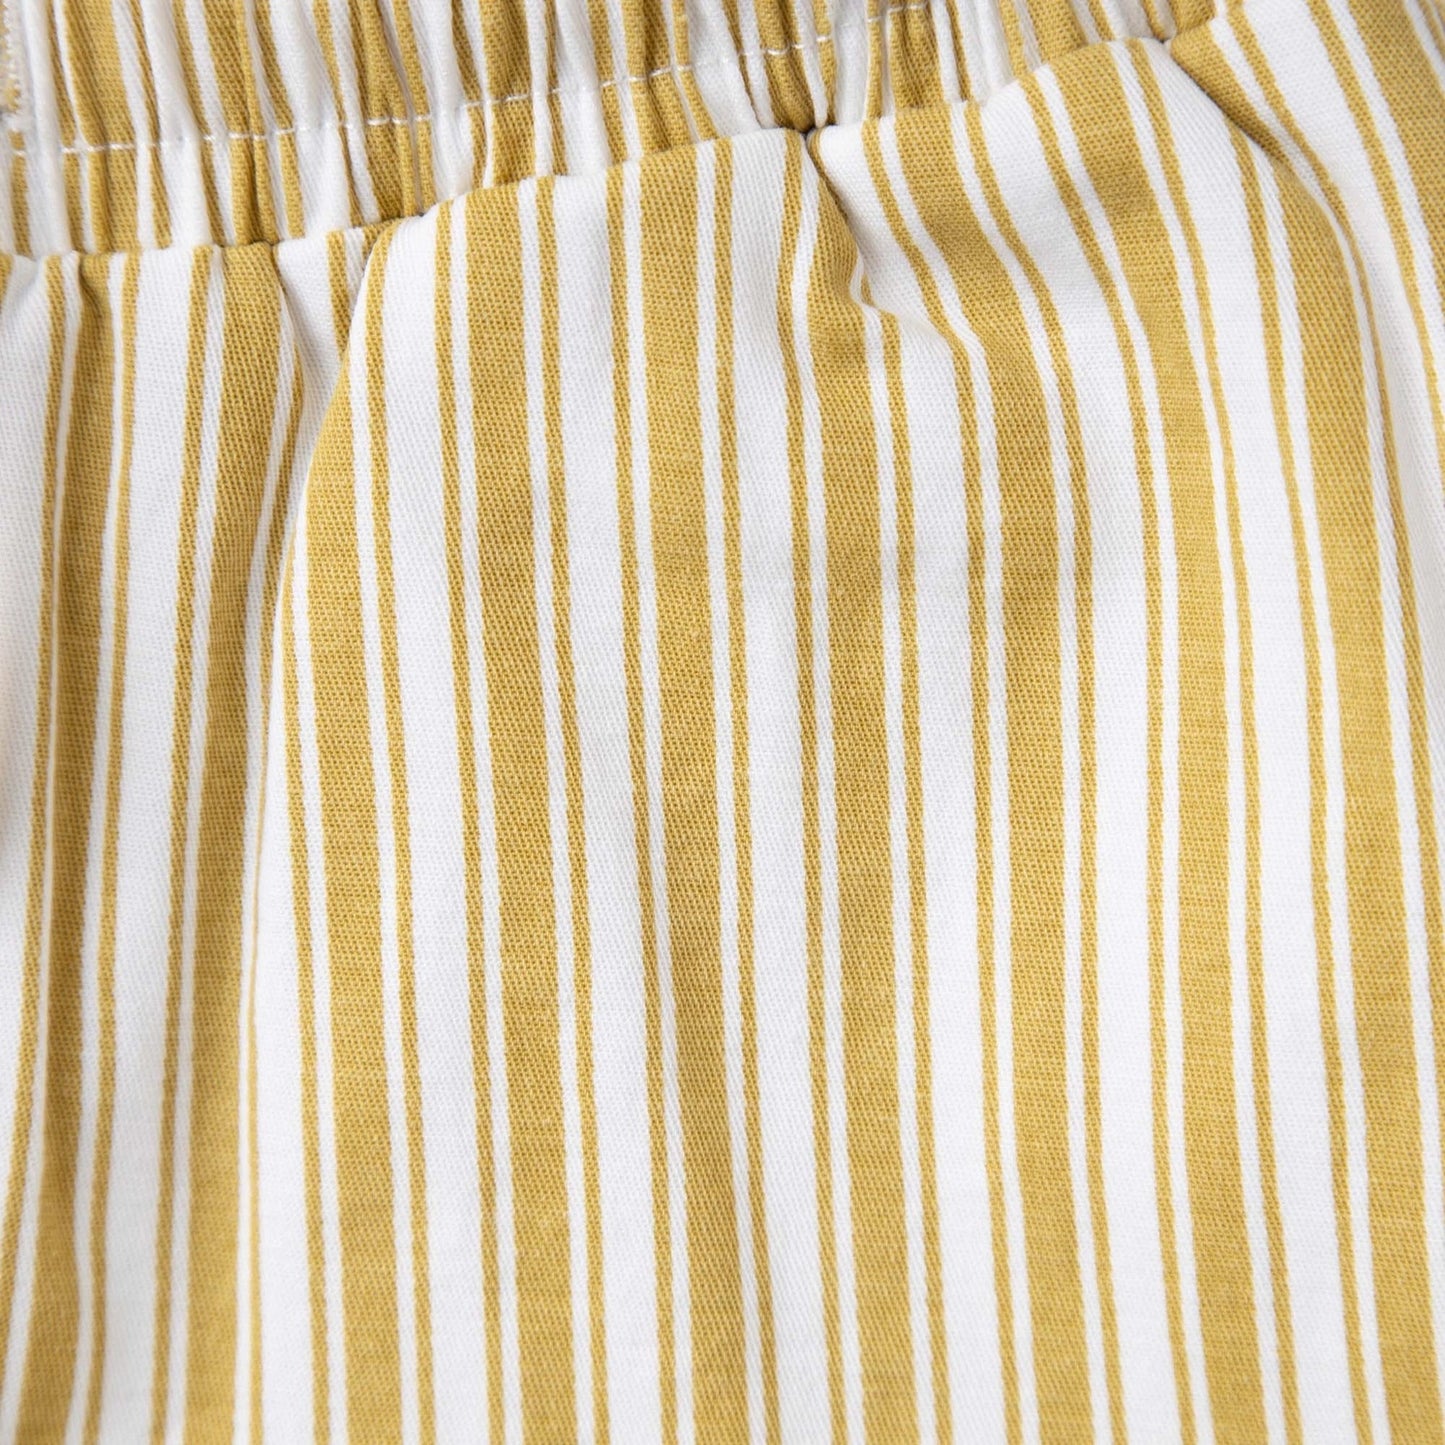 Charlie Stripe Shorts - Mustard